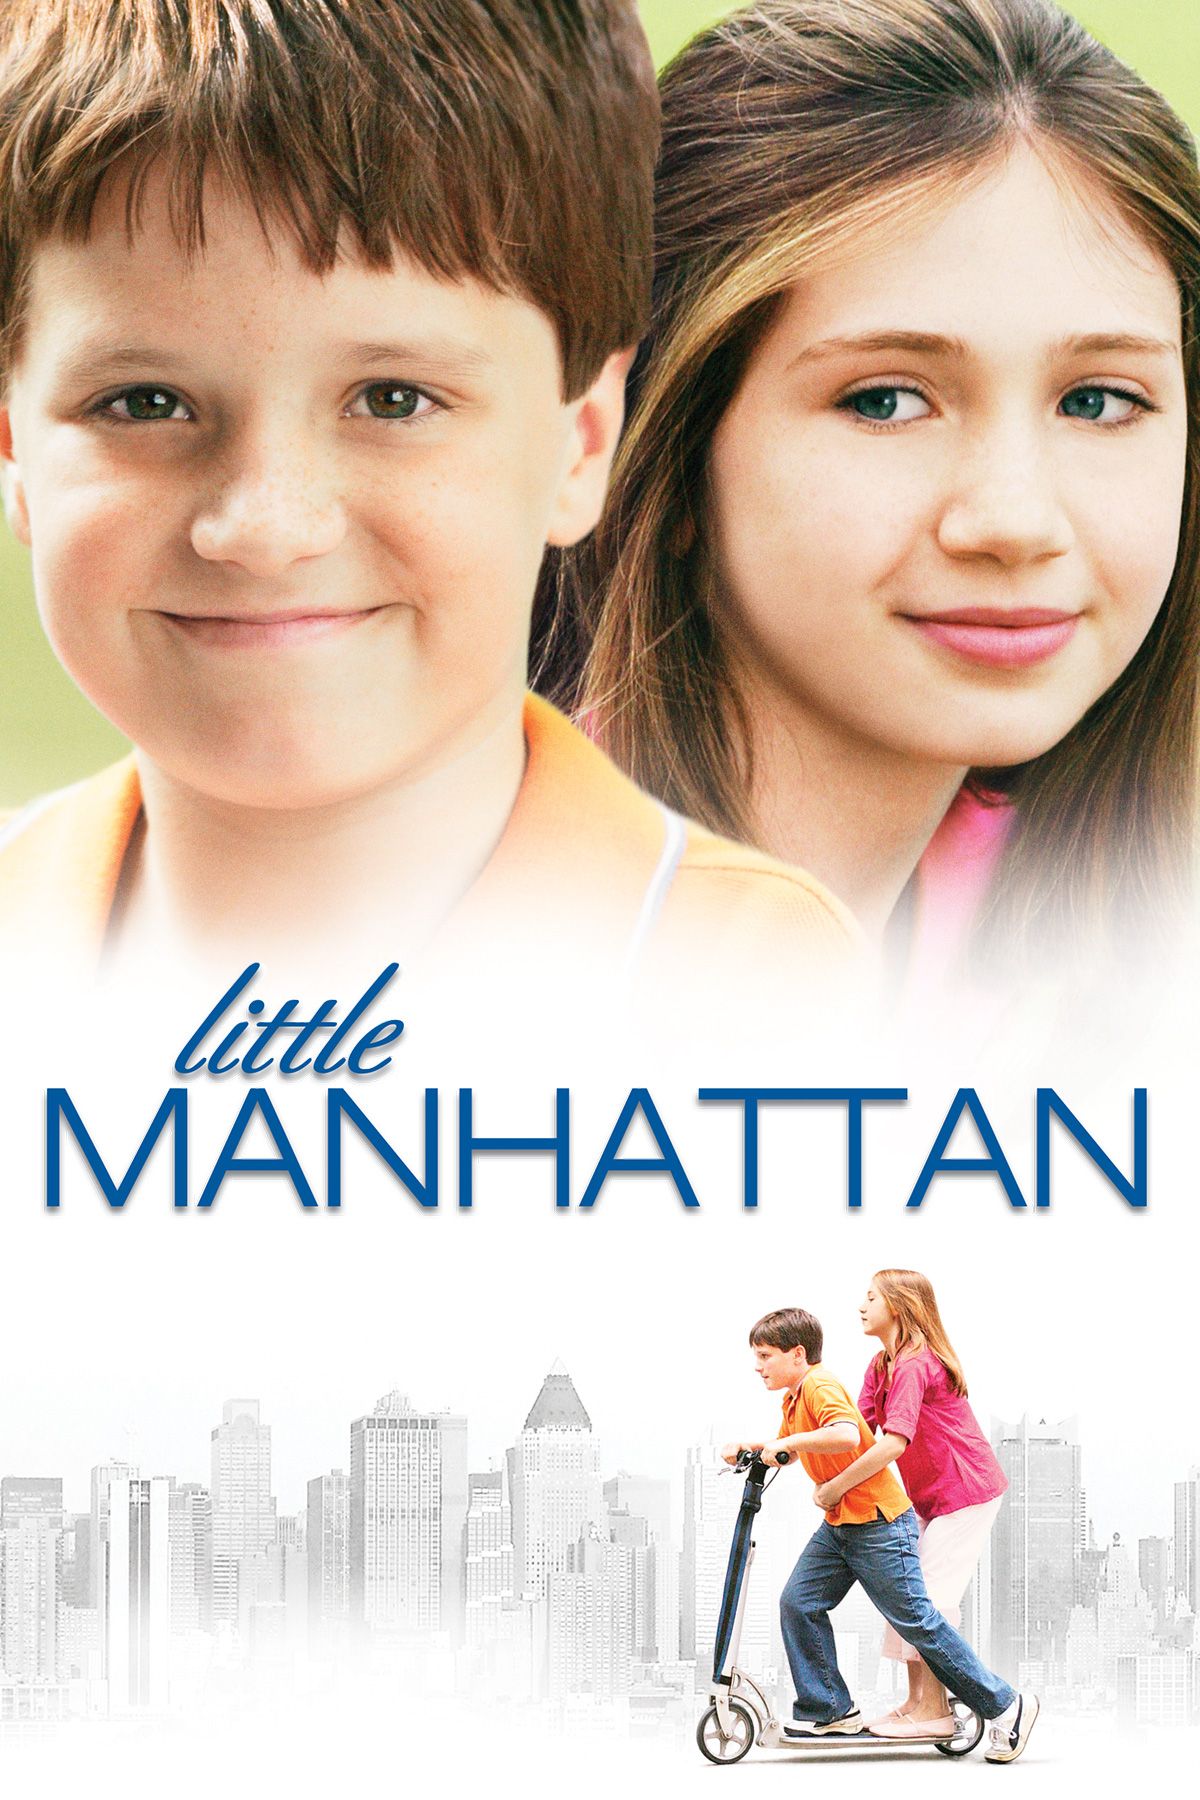 dan duncombe recommends Little Manhattan Full Movie